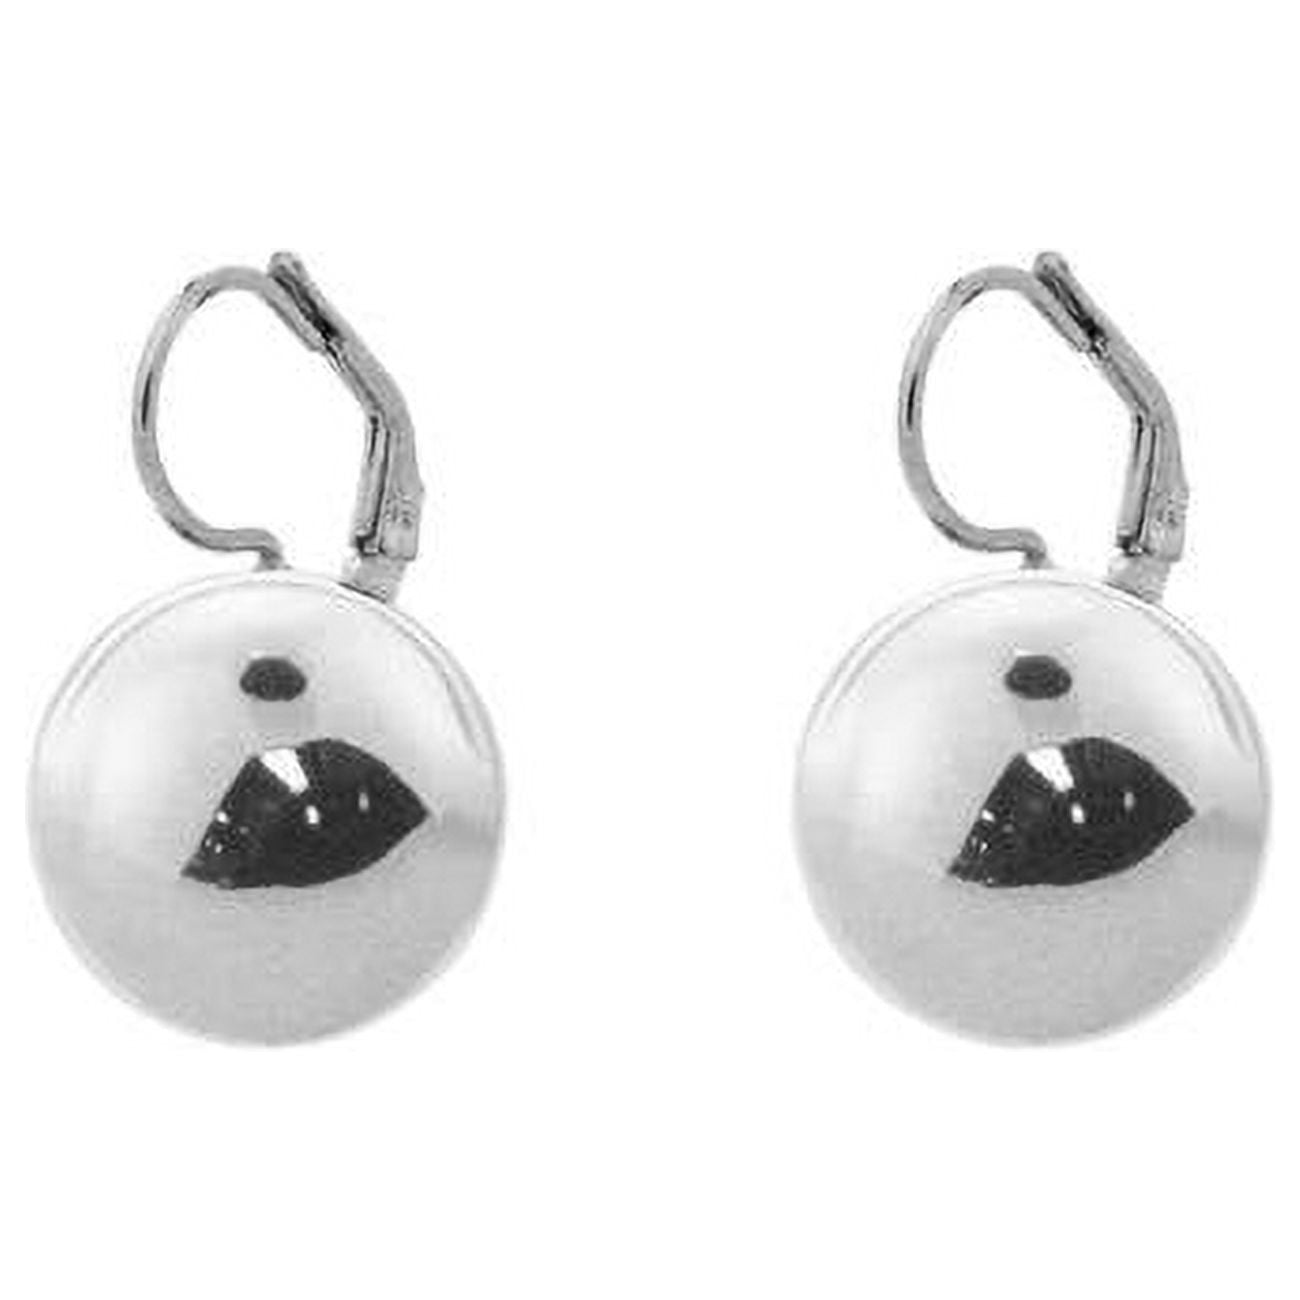 125129 16 Mm Sterling Silver French Hook Ultra-light Ball Earrings